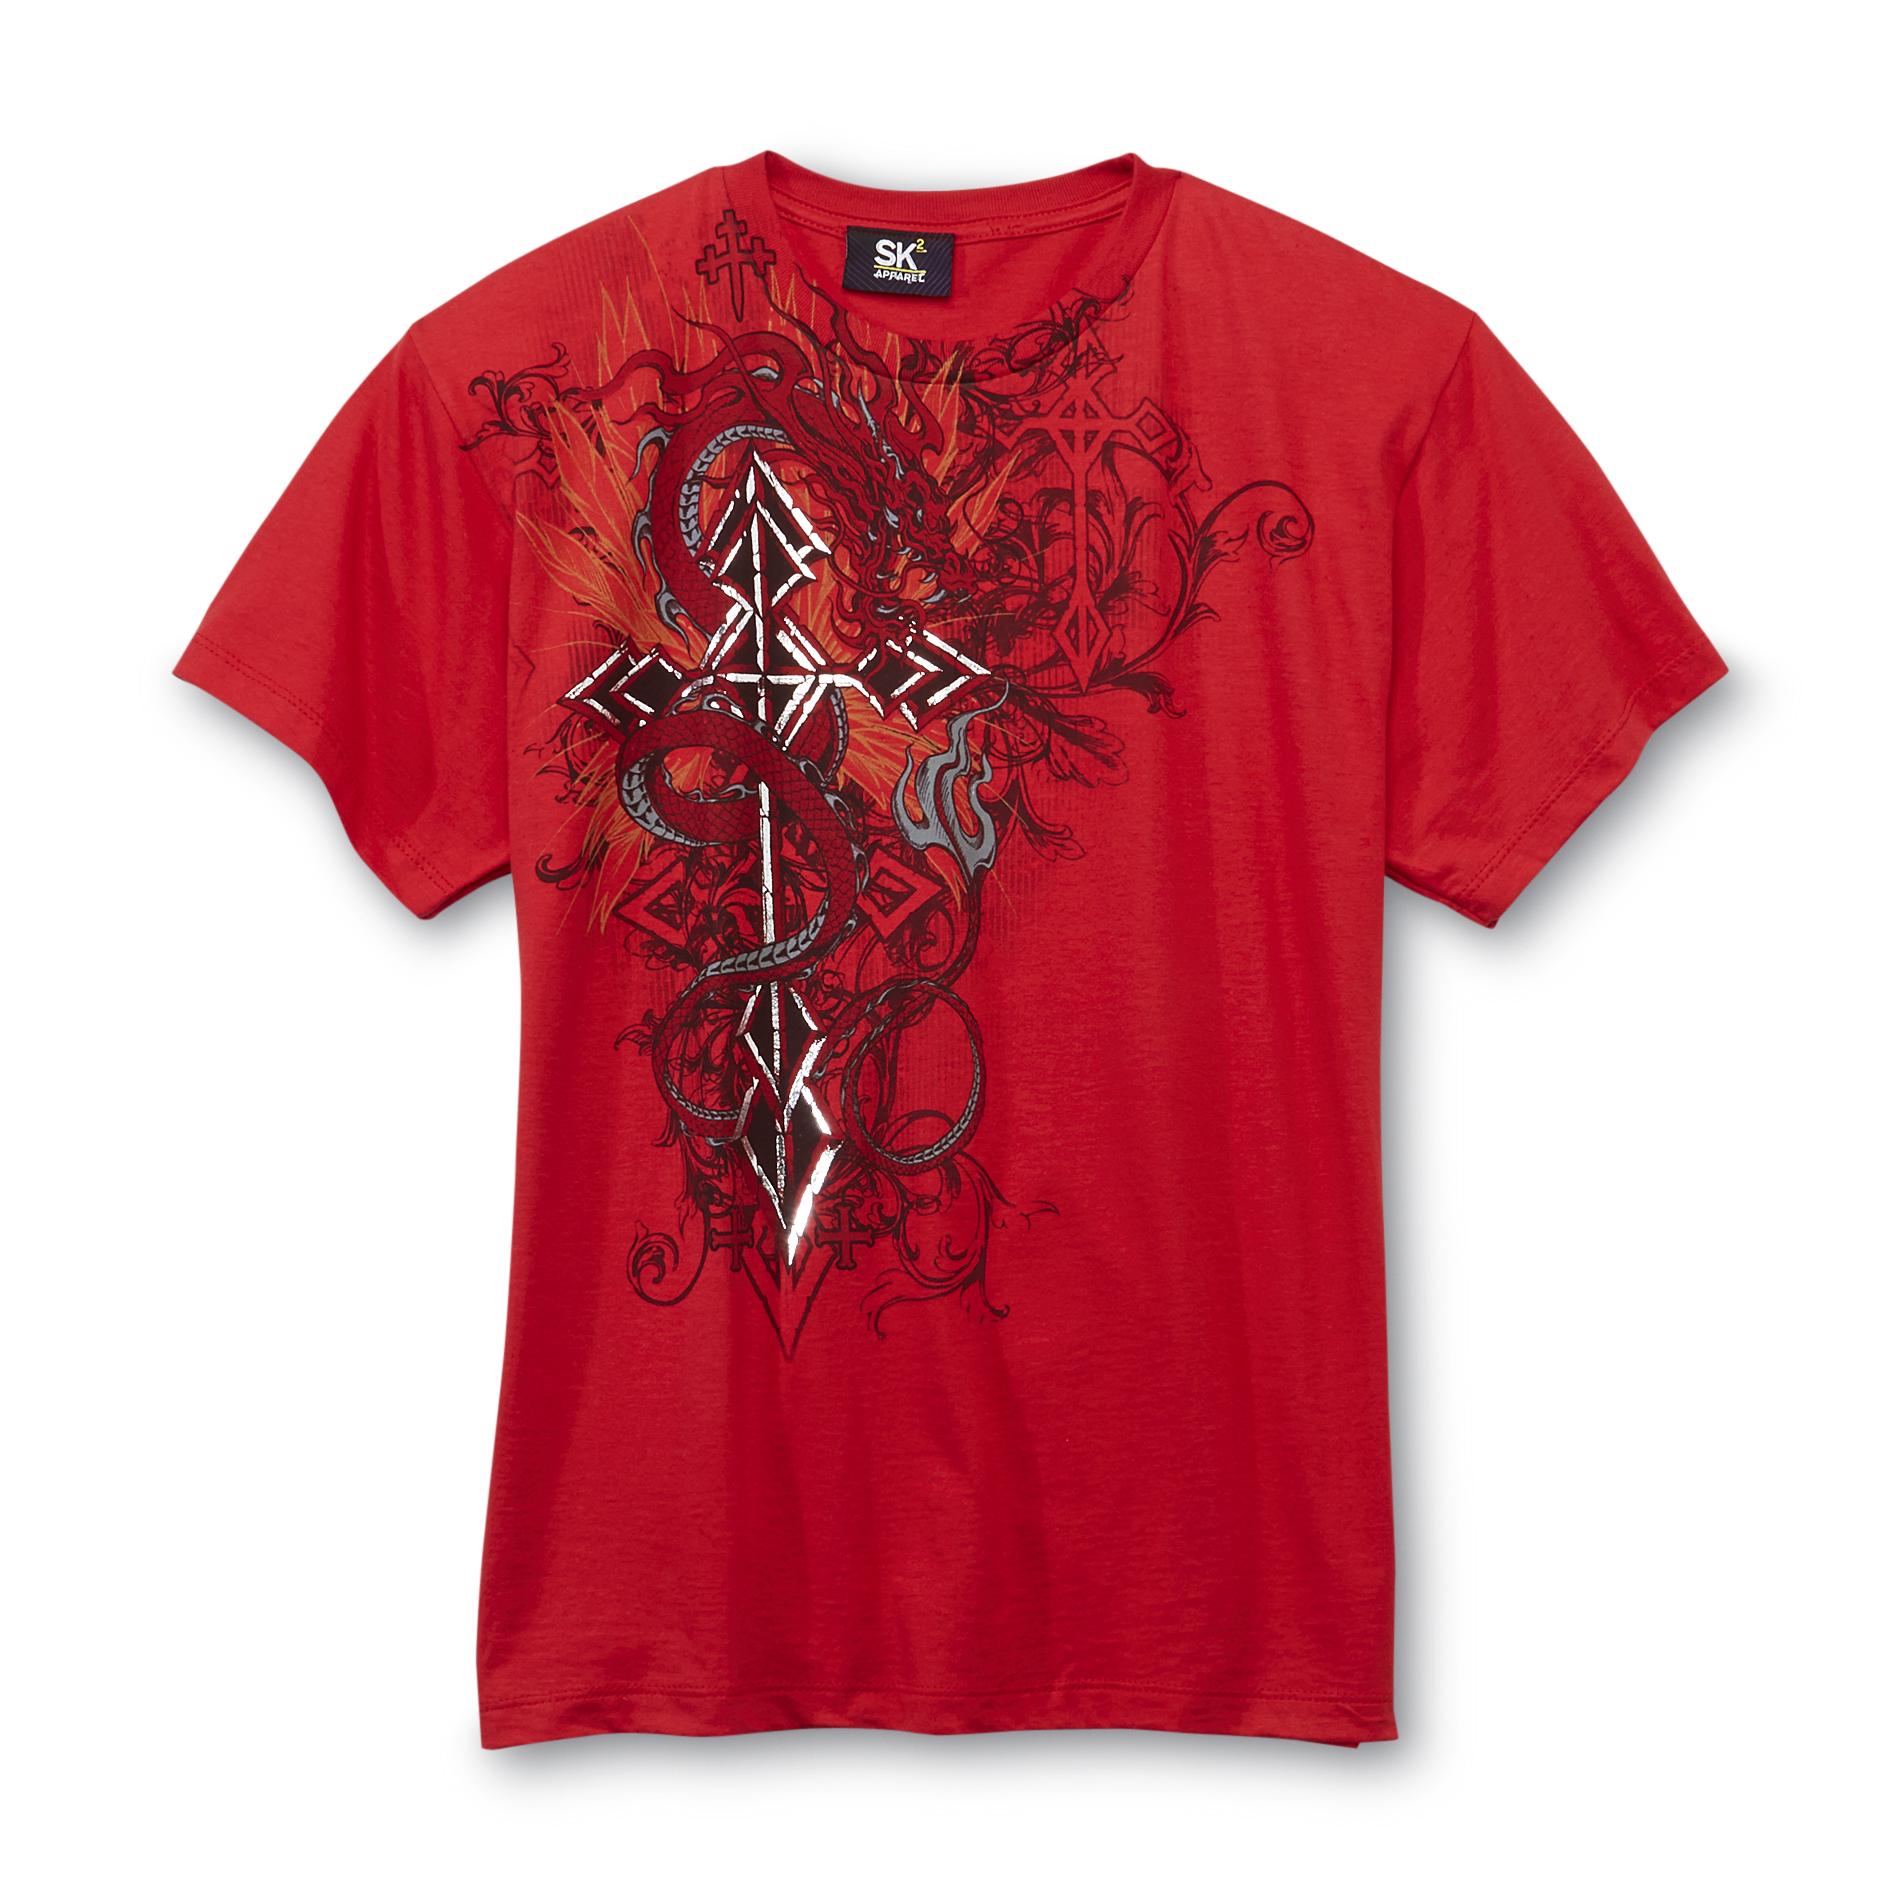 SK2 Boy's Graphic T-Shirt - Dragon & Metallic Cross